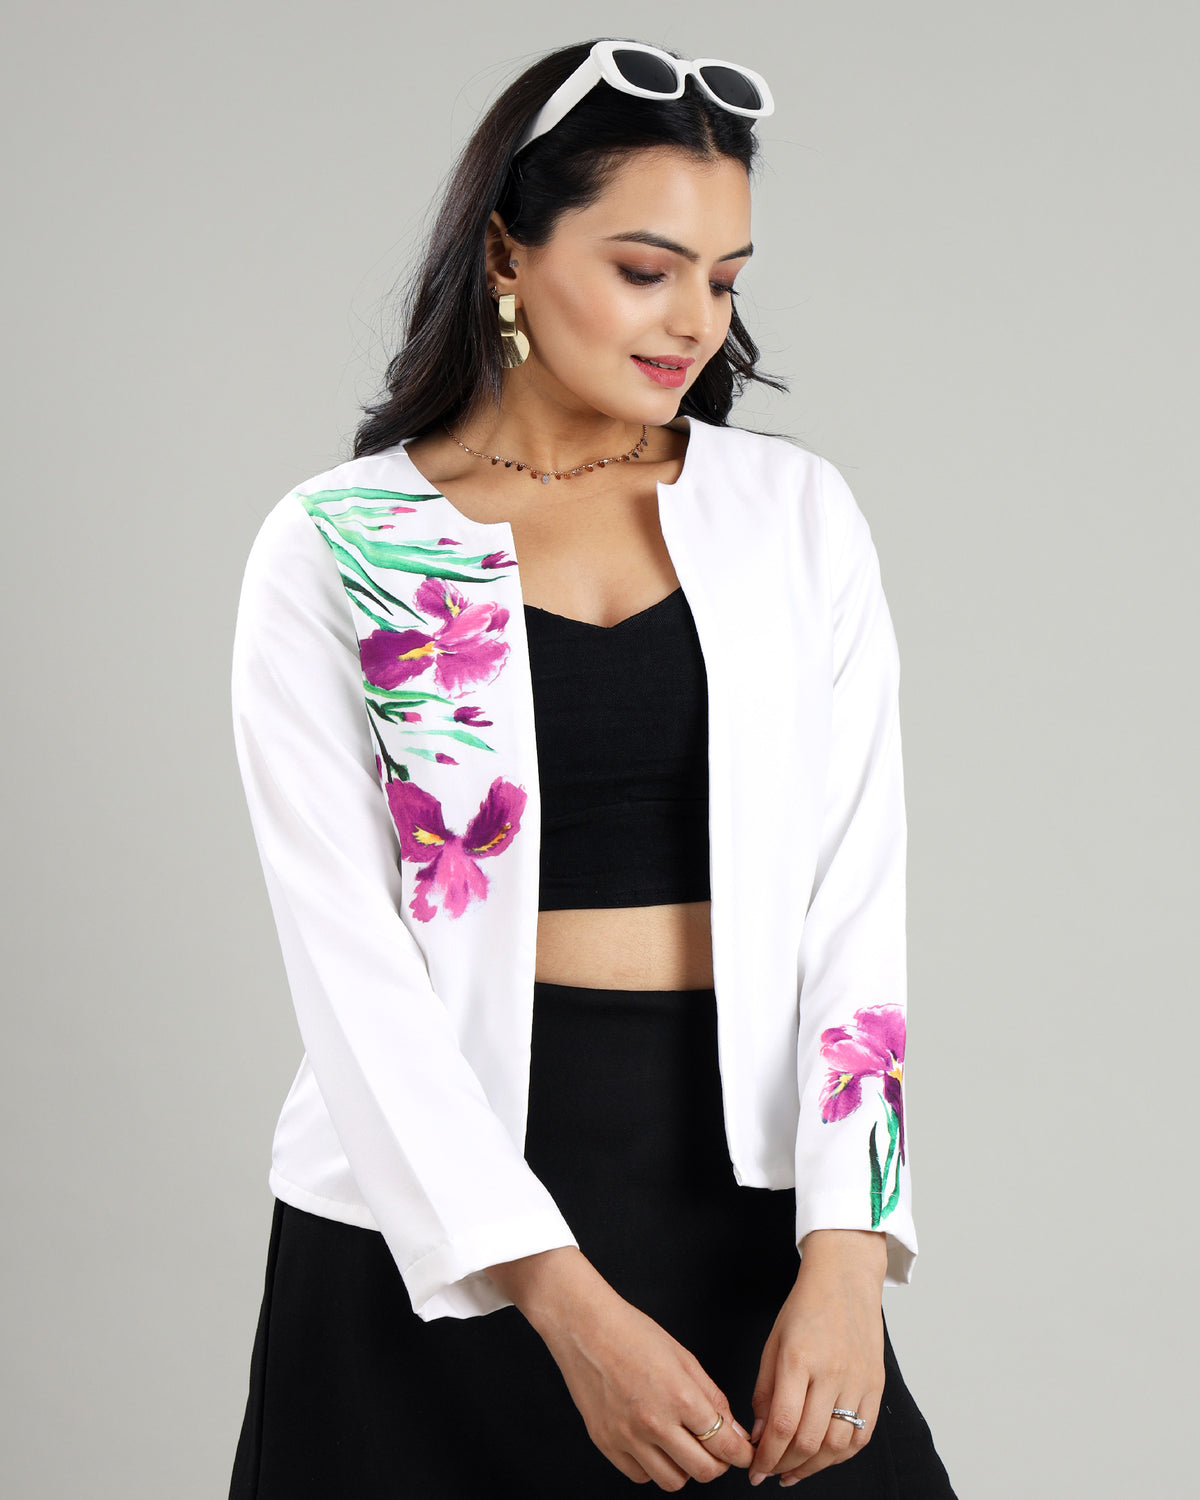 The Floral Remix: Women's Patchwork Print Jacket